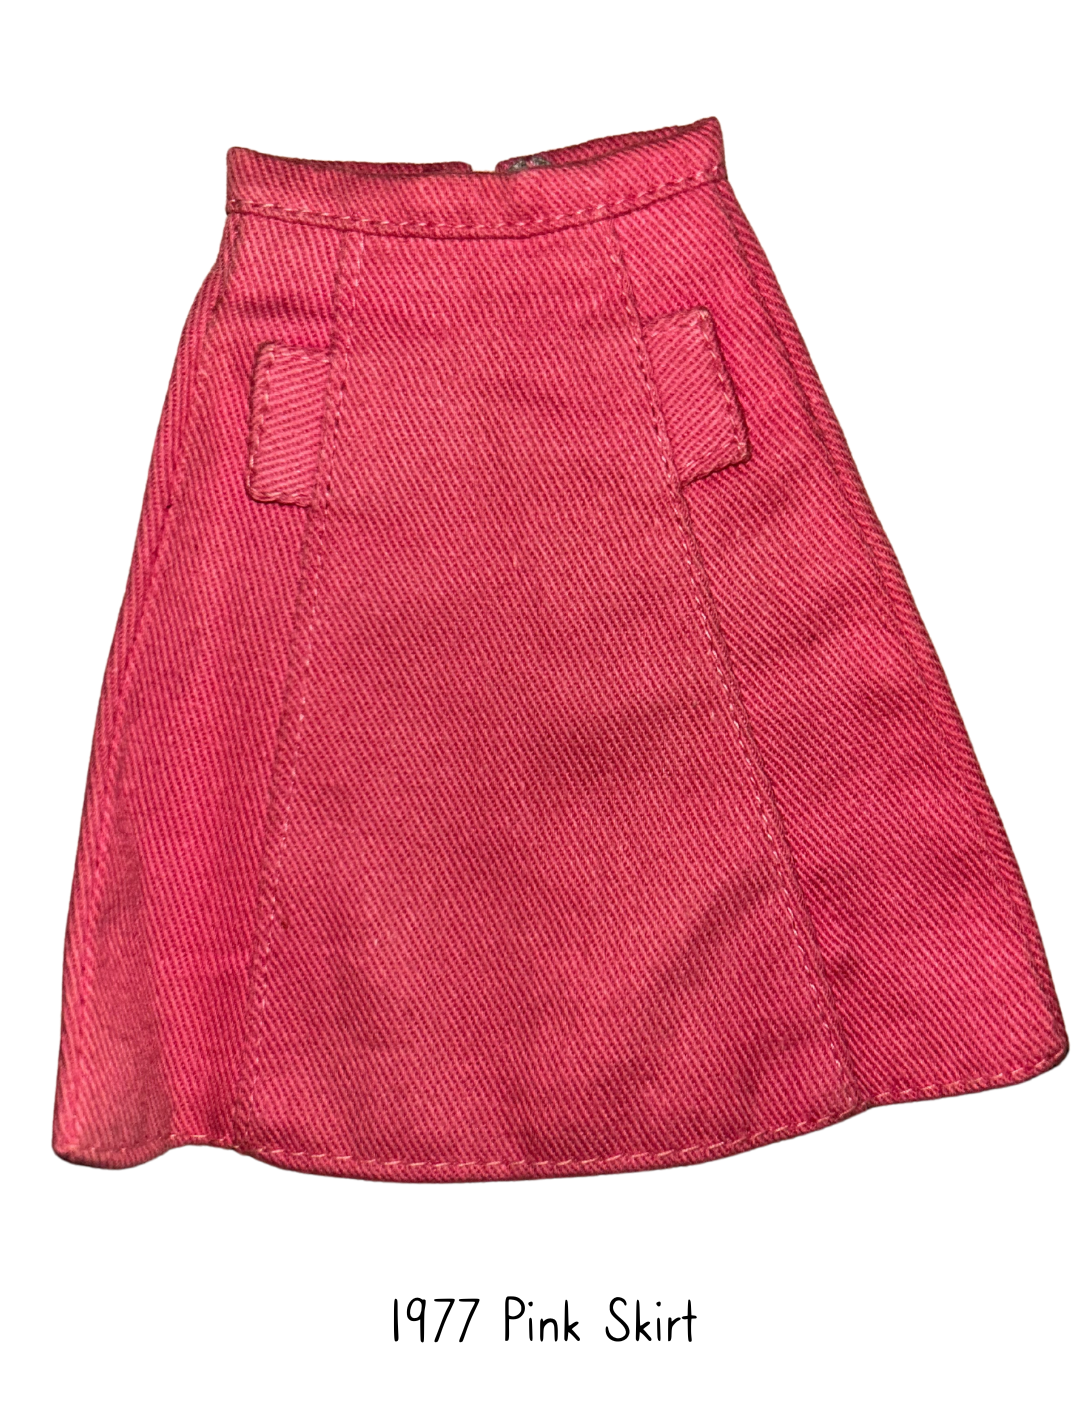 Pedigree Sindy 1977 Mix n Match Pink Skirt